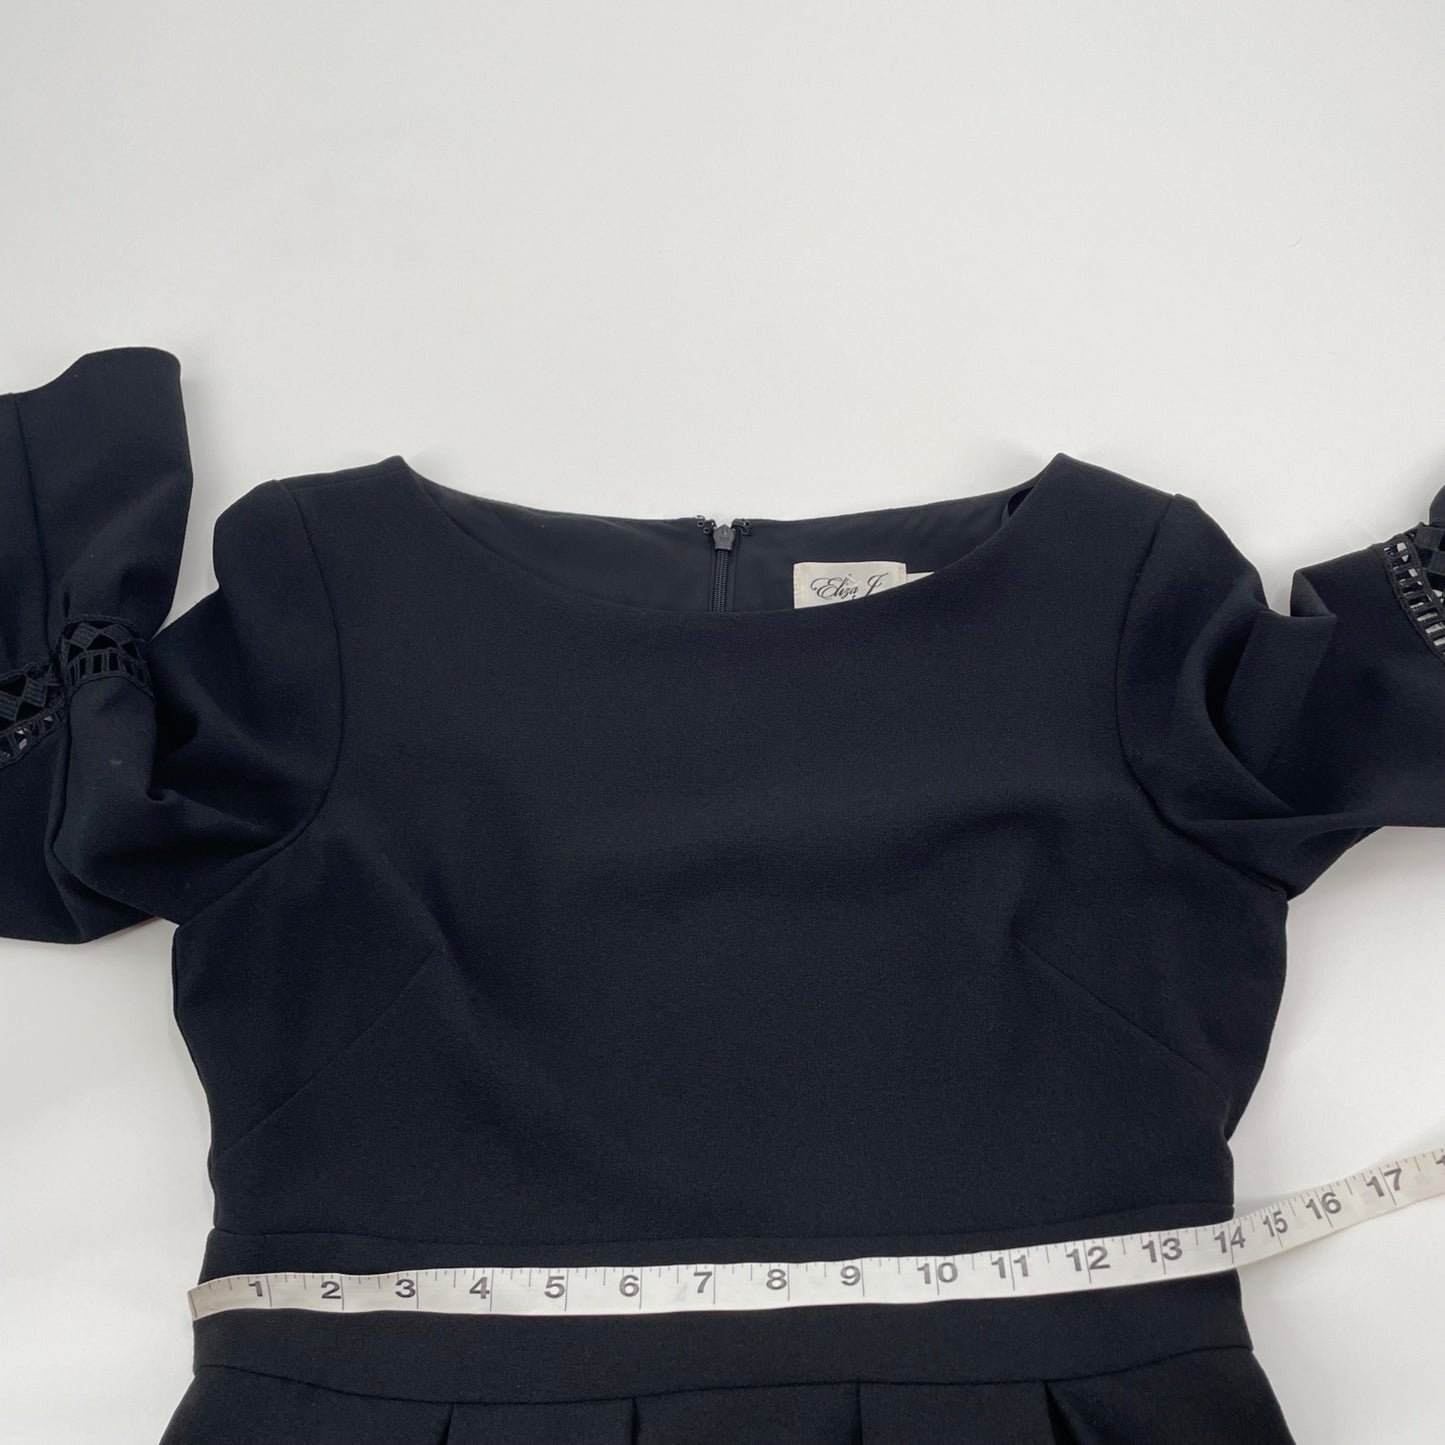 Eliza J Black Flare Sleeve Fit & Flare Dress Women's Size 4 Wednesday Addams